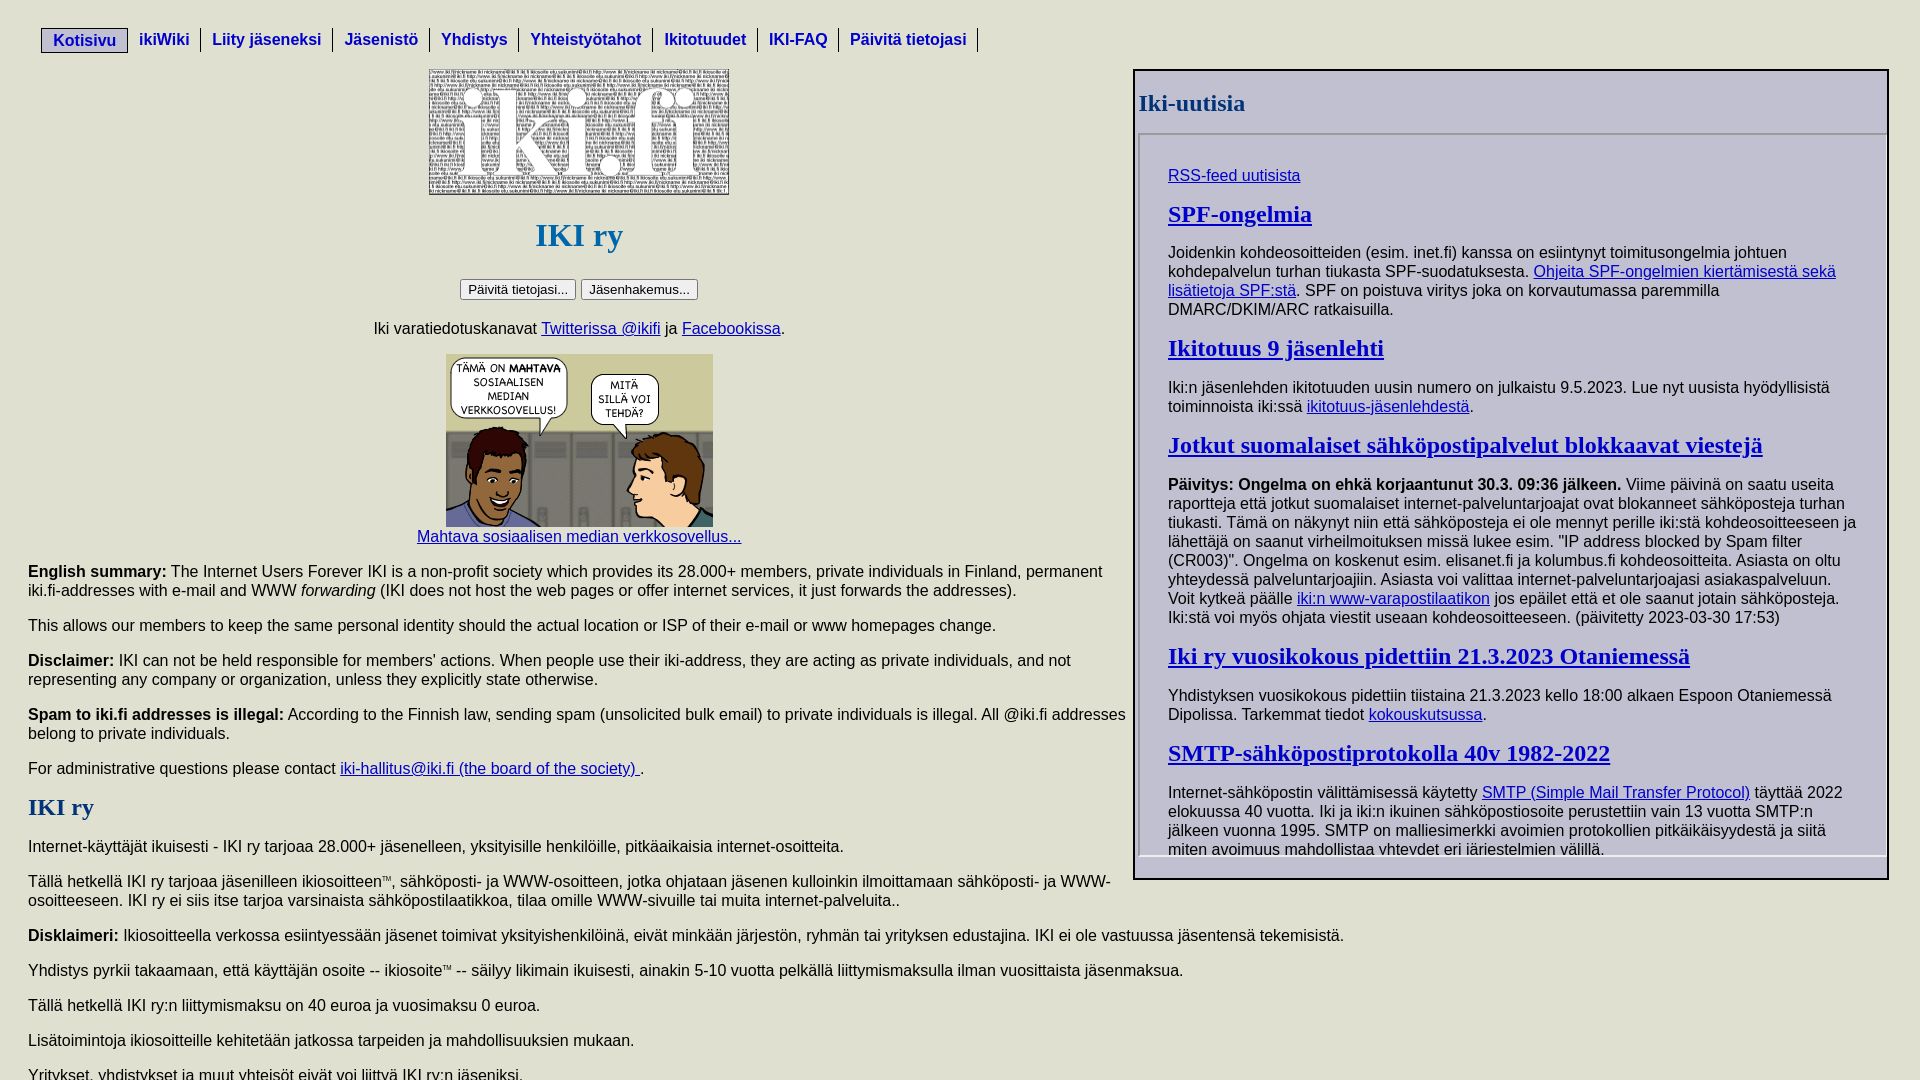 Status do site iki.fi está   ONLINE